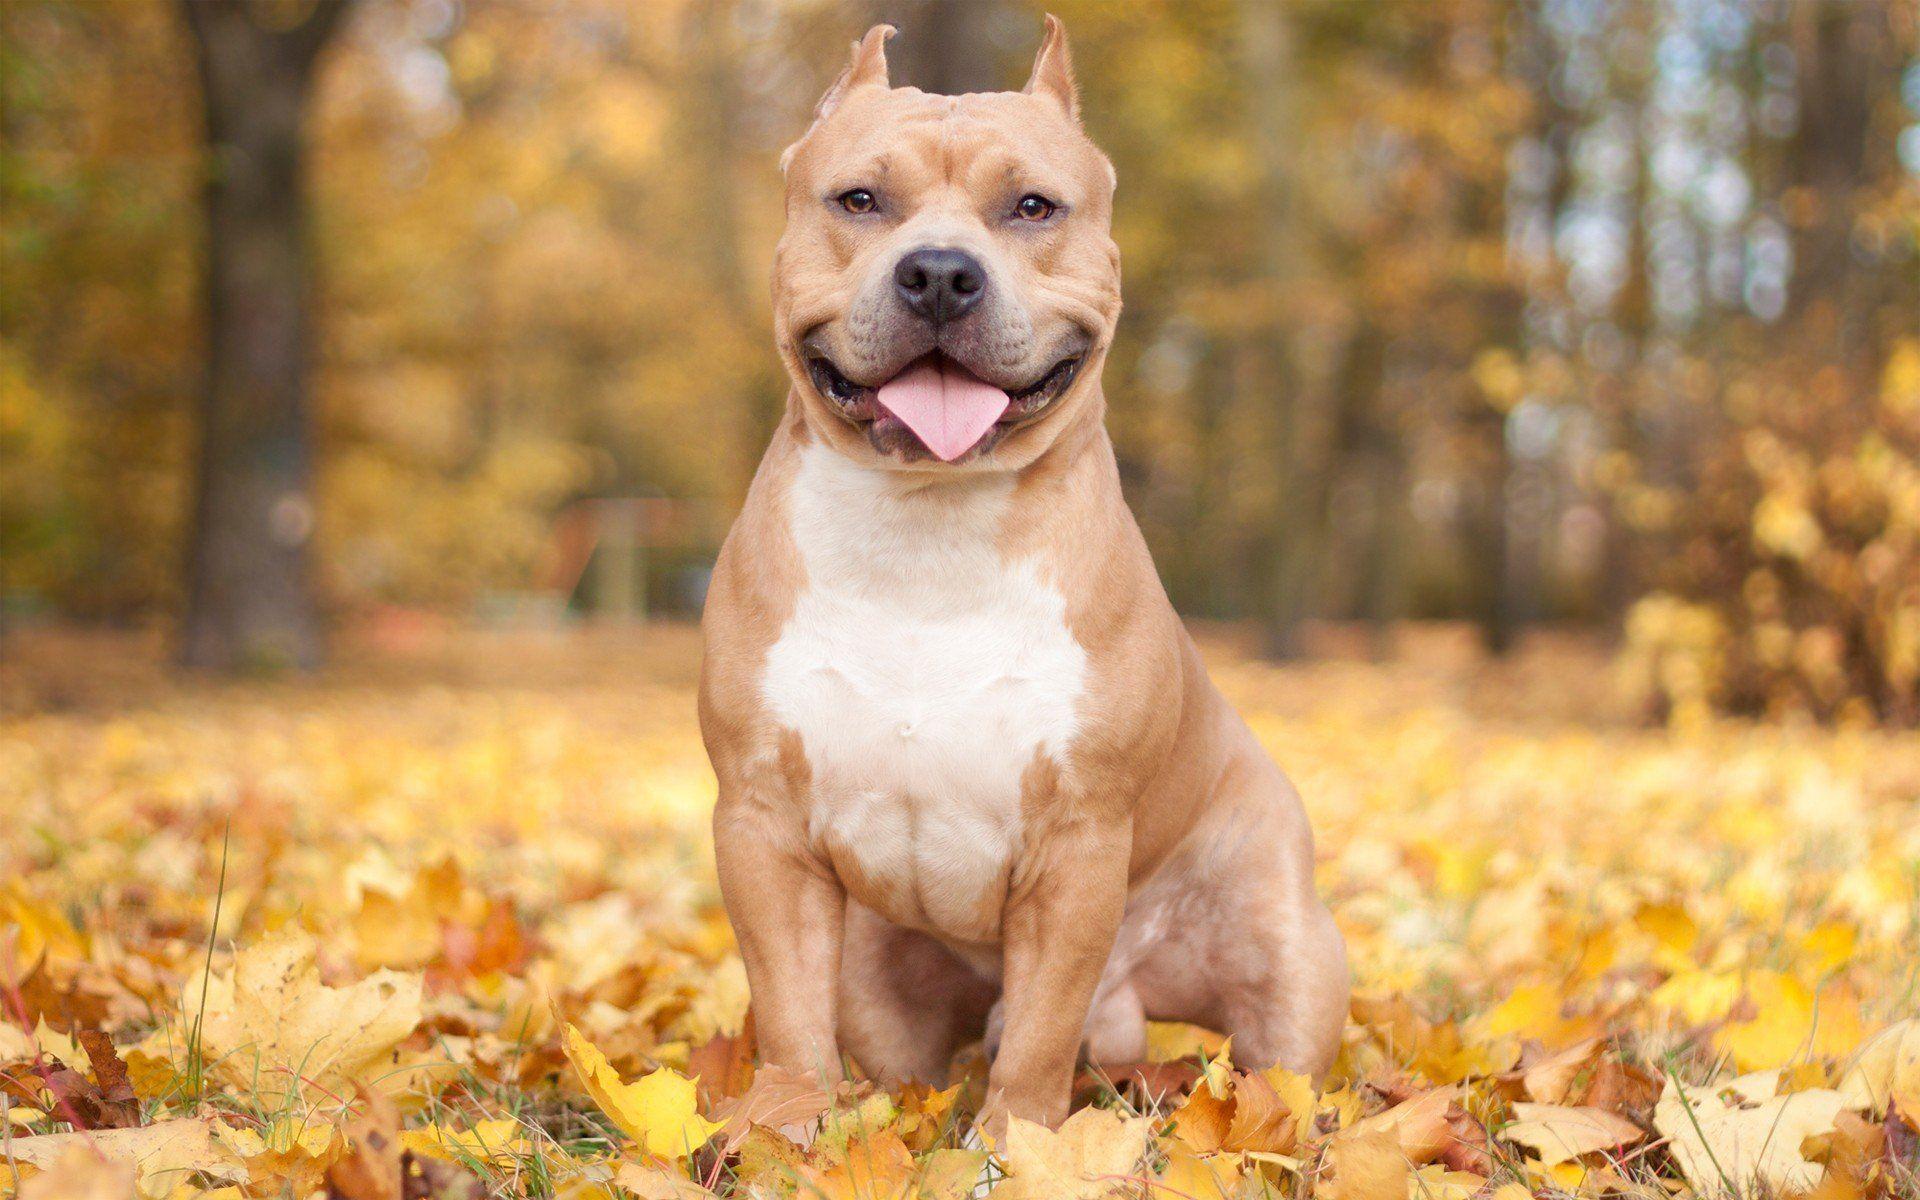 Pitbull Dog Wallpaper Background 49482 2560x1600 px